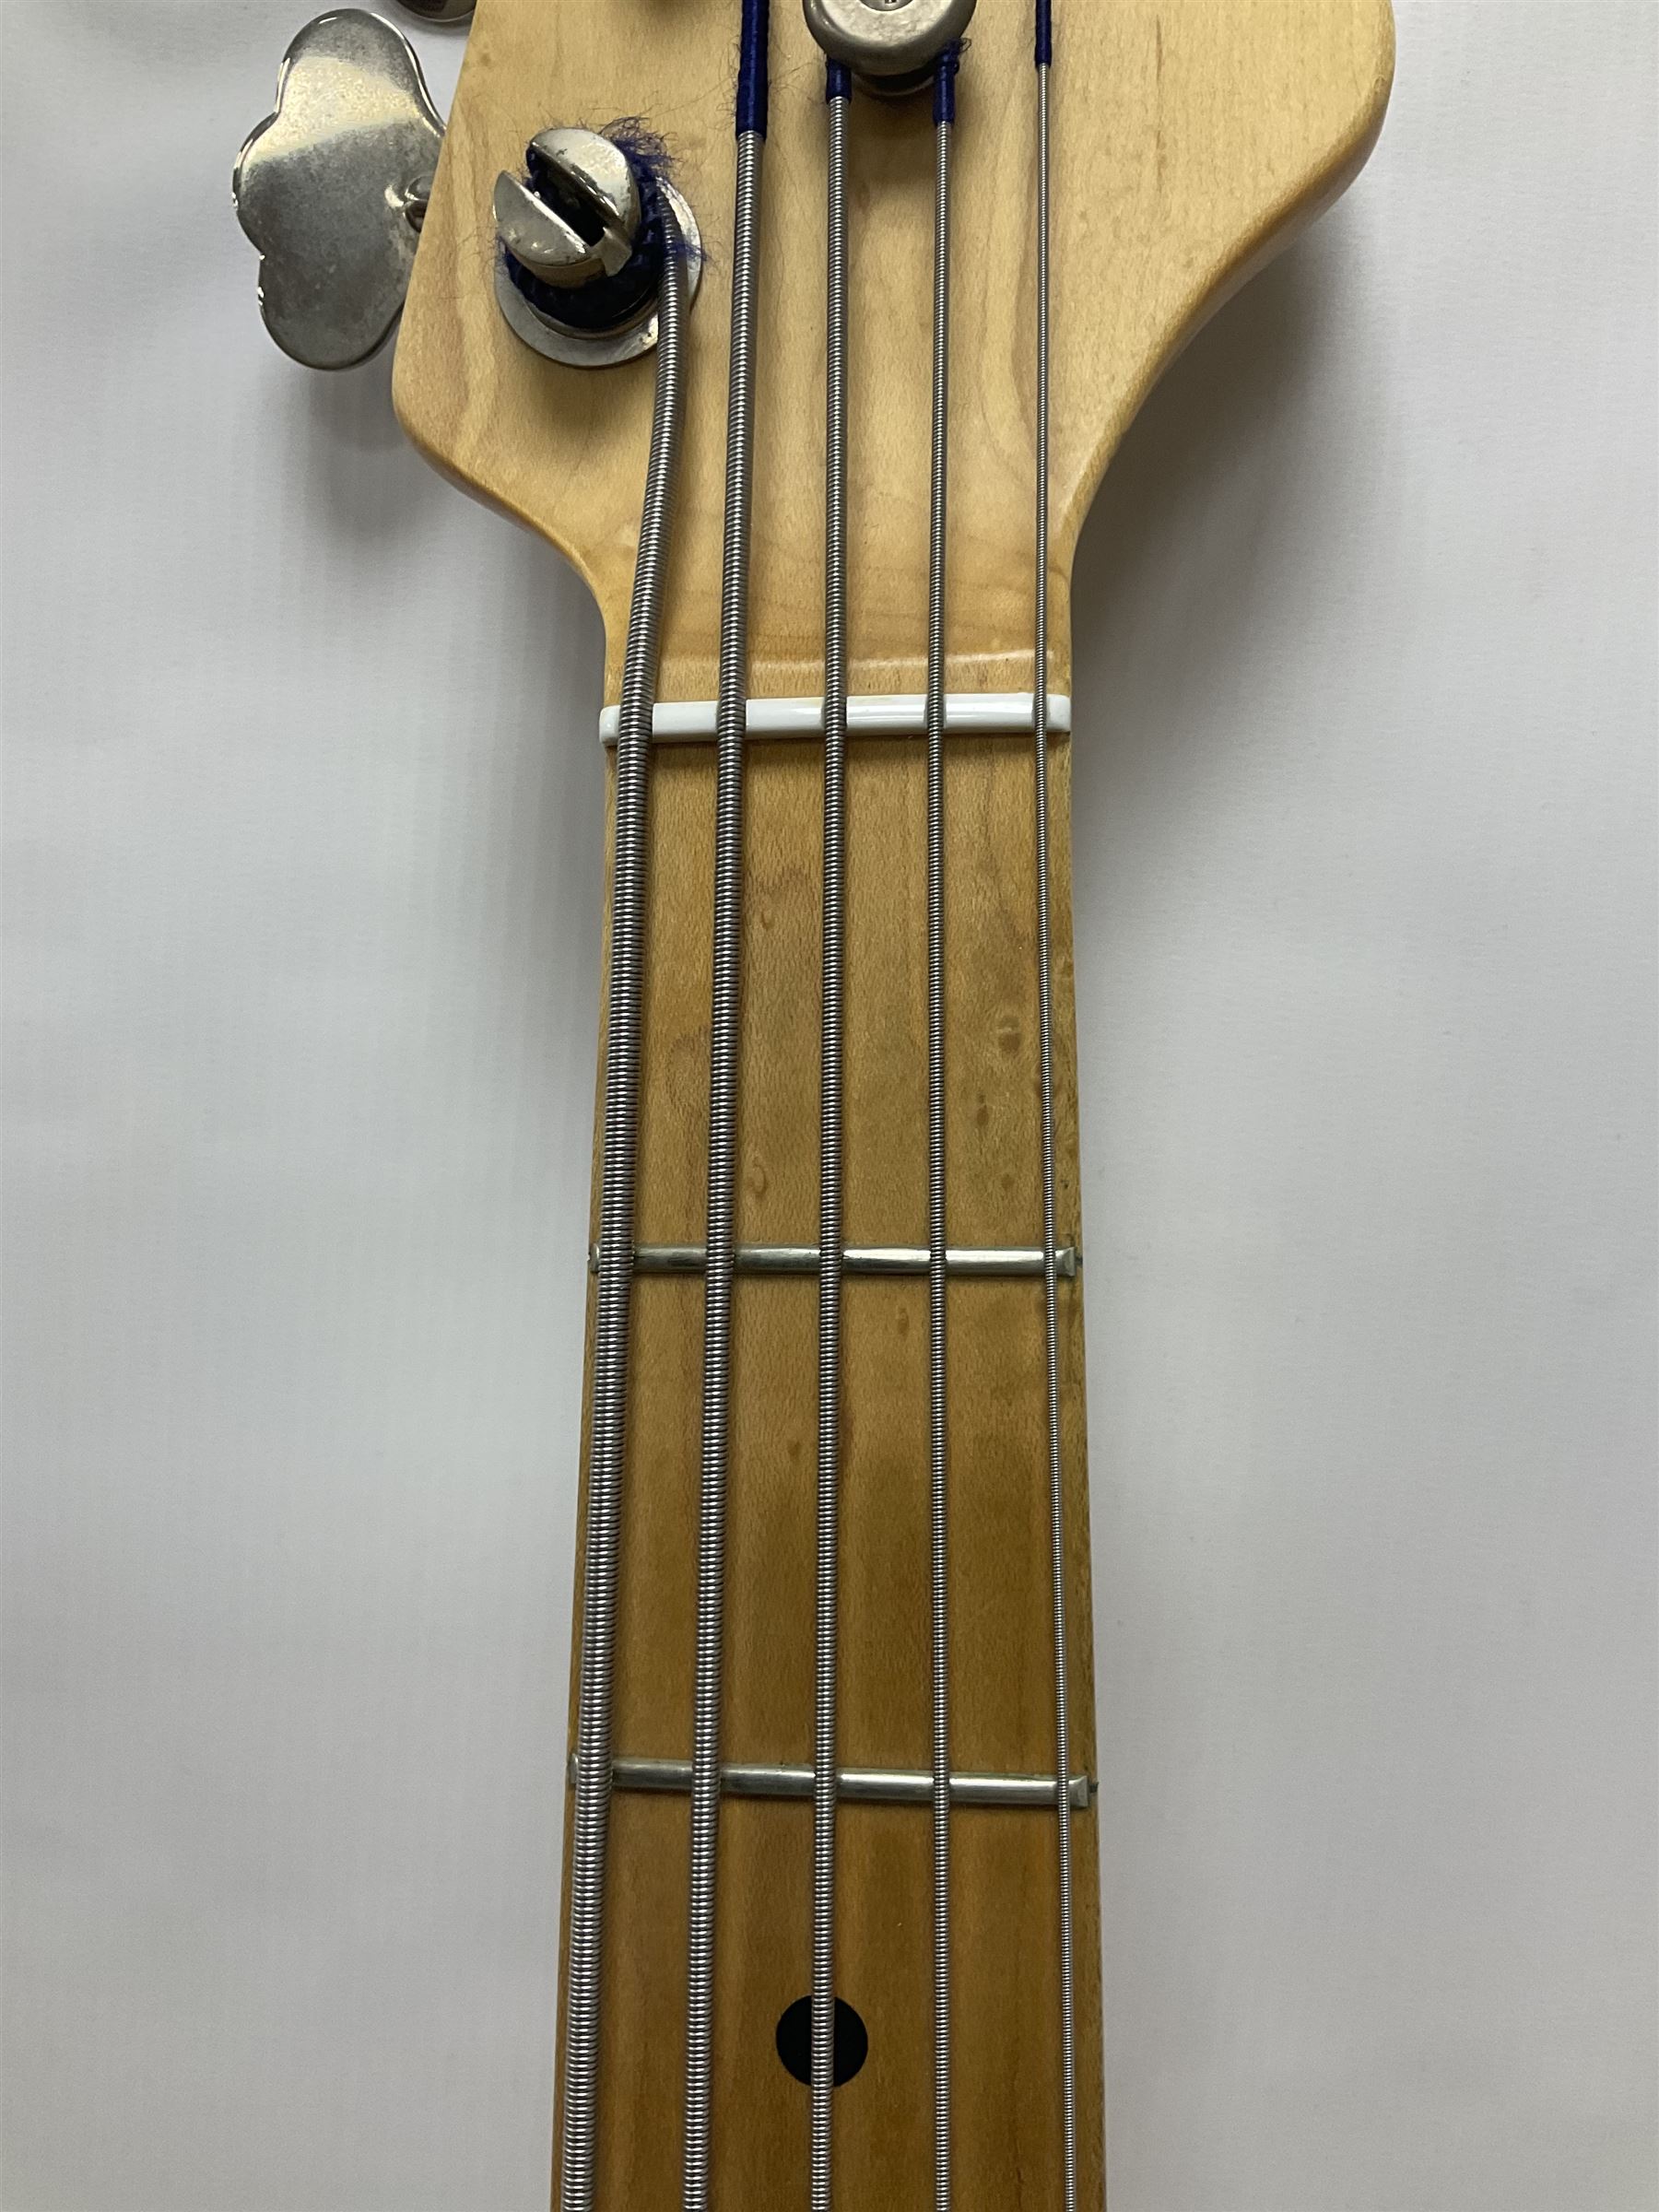 Ernie Ball Music Man Sting Ray 5 string bass guitar - Image 11 of 19